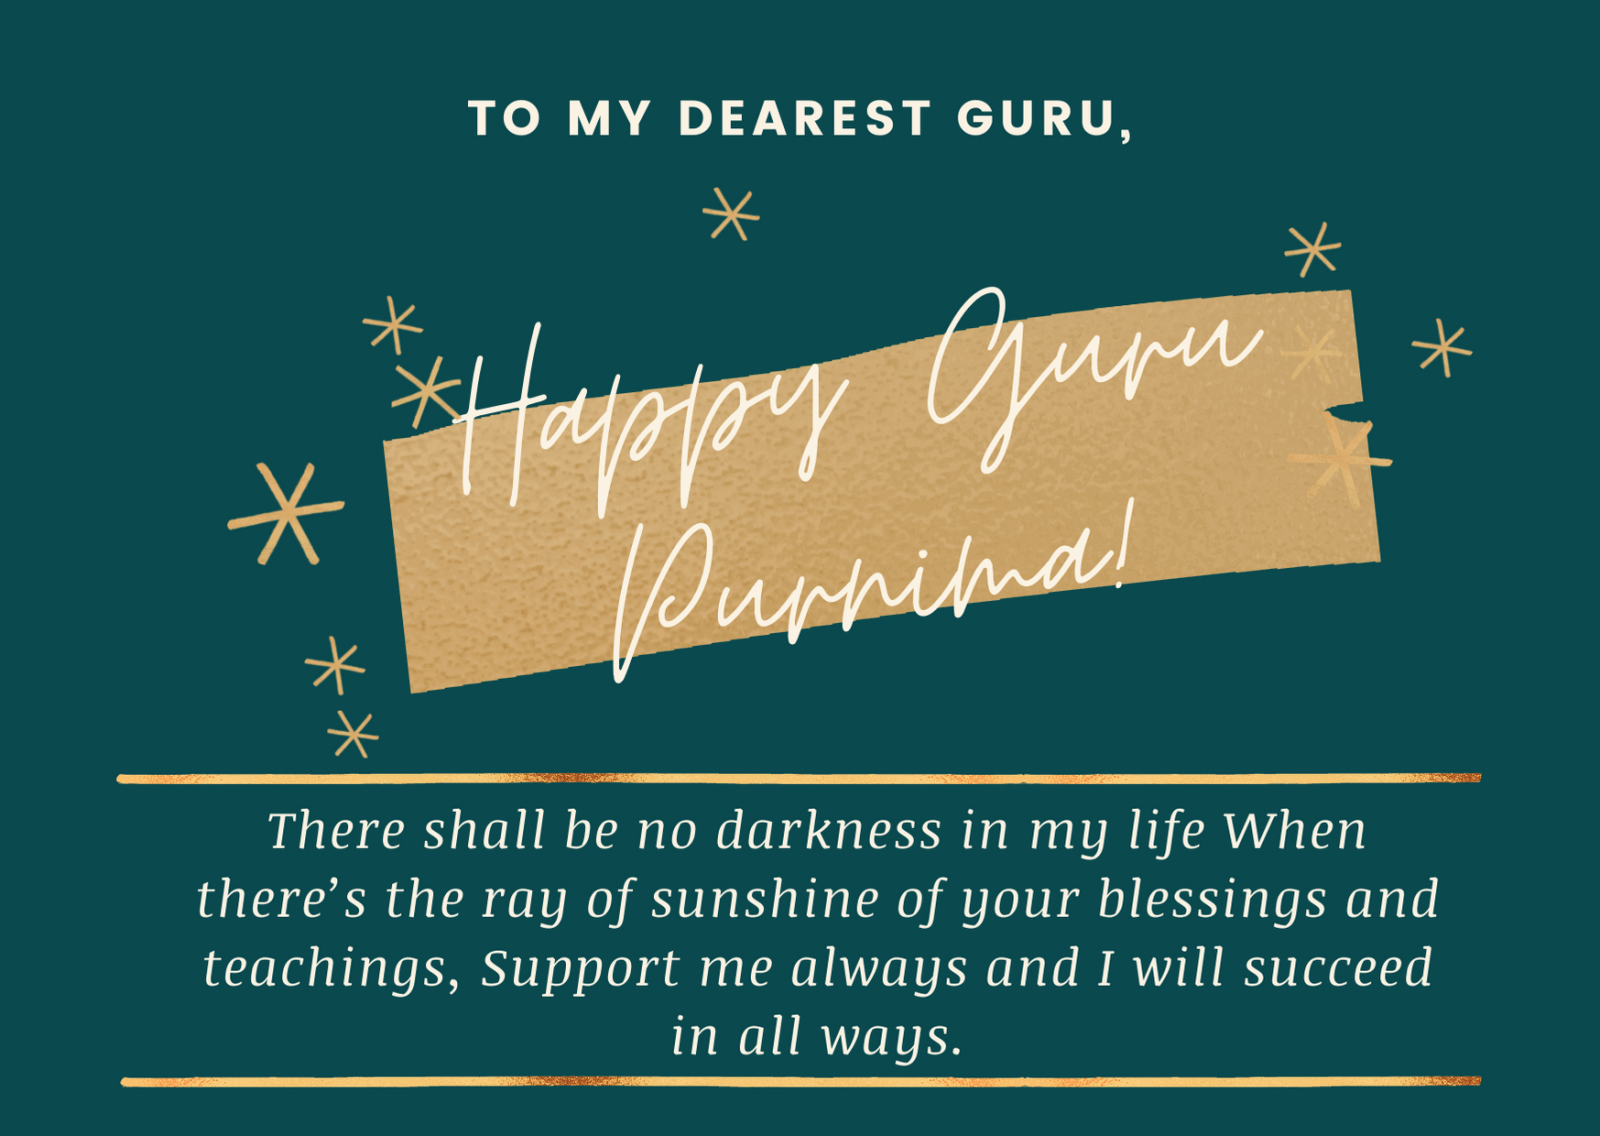 happy guru purnima wishes quotes